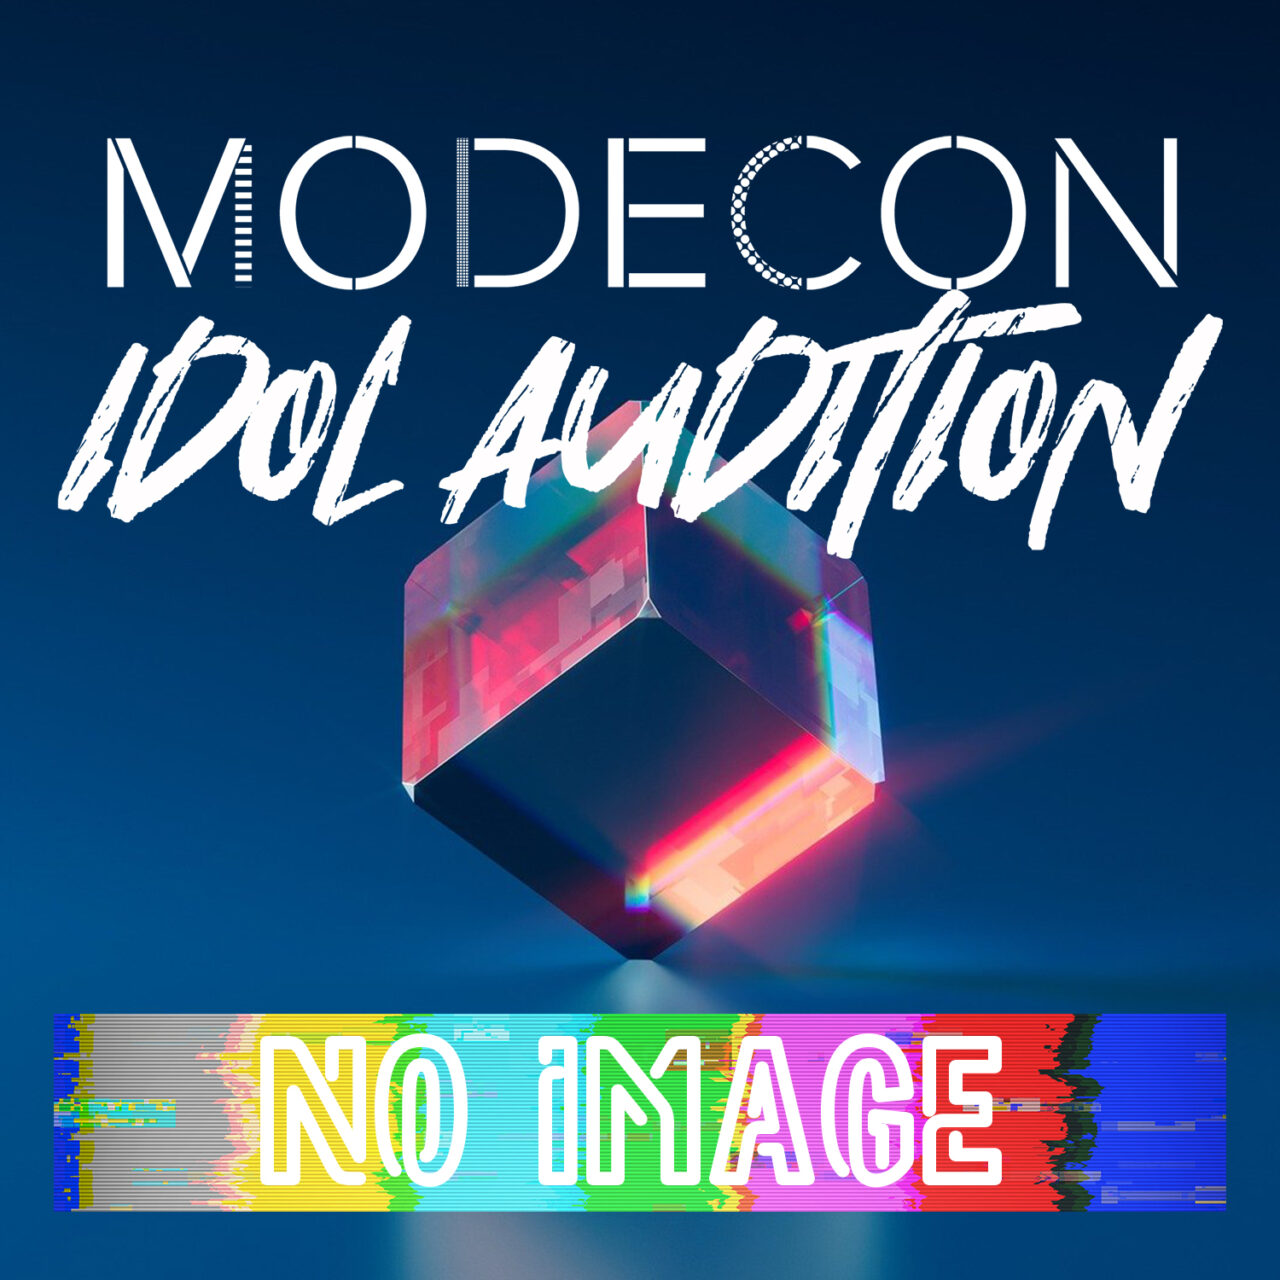 【modecon Idol Audition】3次審査結果発表 Modecon Idol Audition 